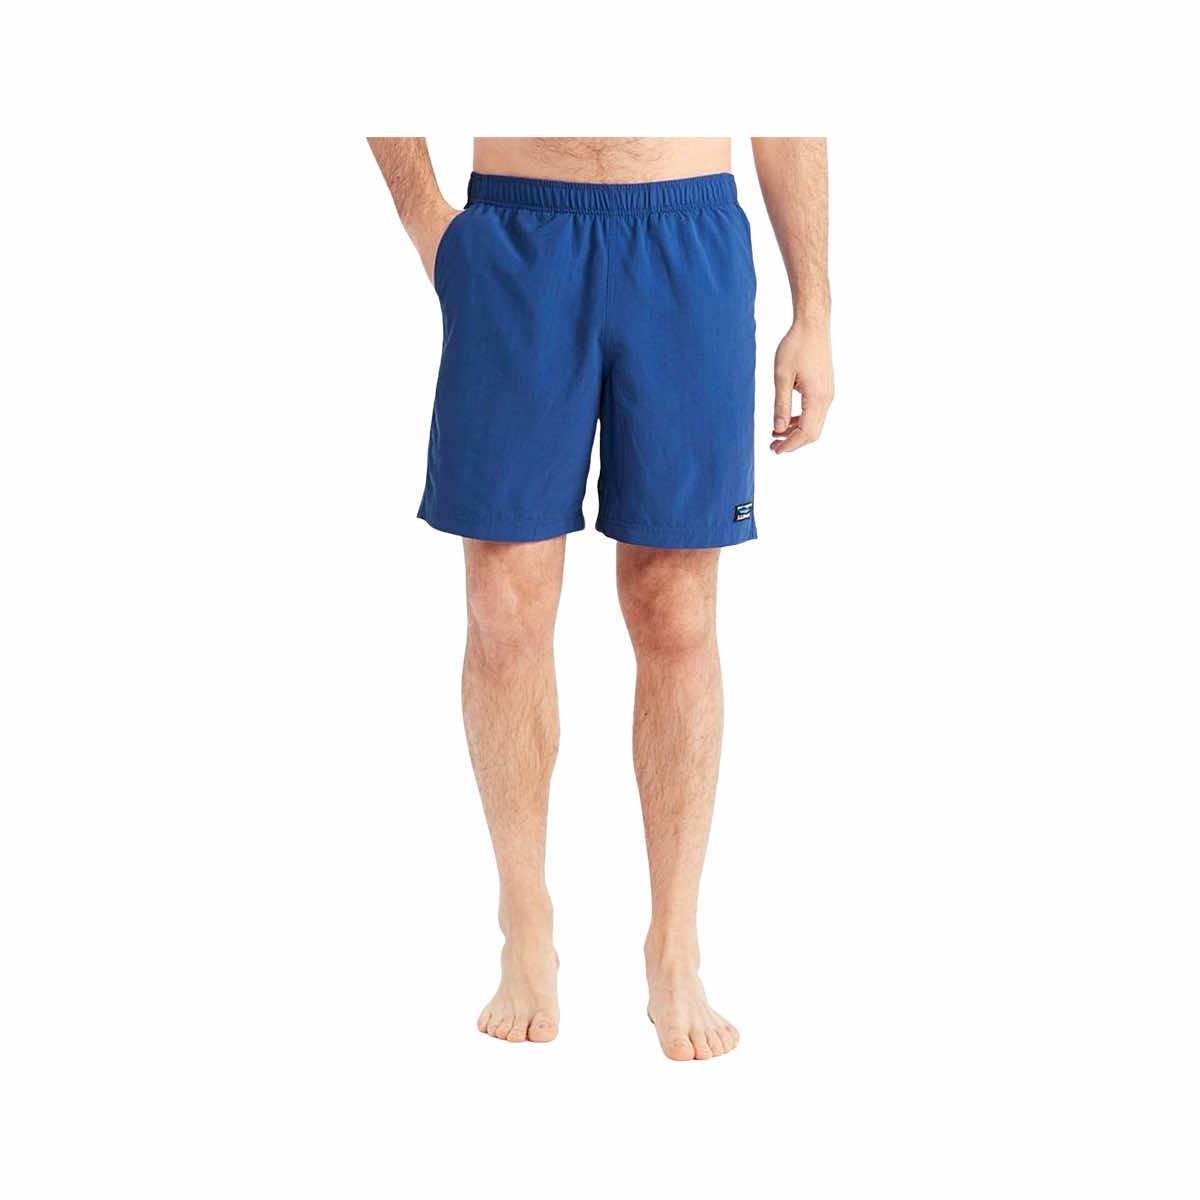 Mast General Store | Men's Classic Supplex Sport Shorts - 8 Inch